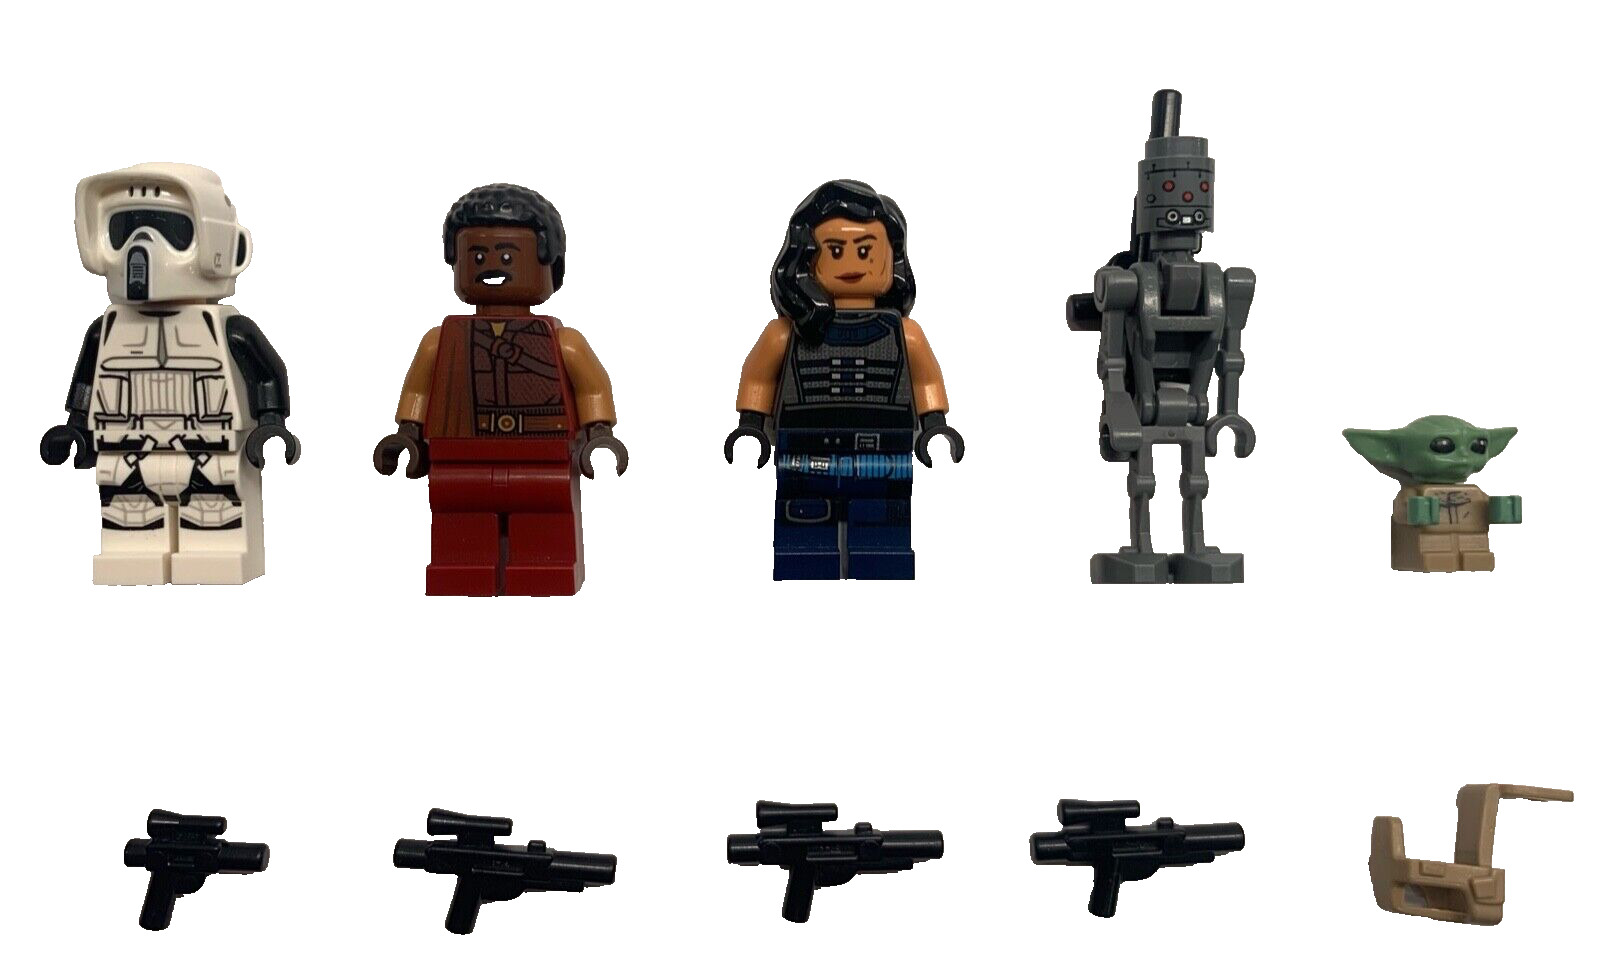 LEGO Star Wars Mandalorian Minifigures